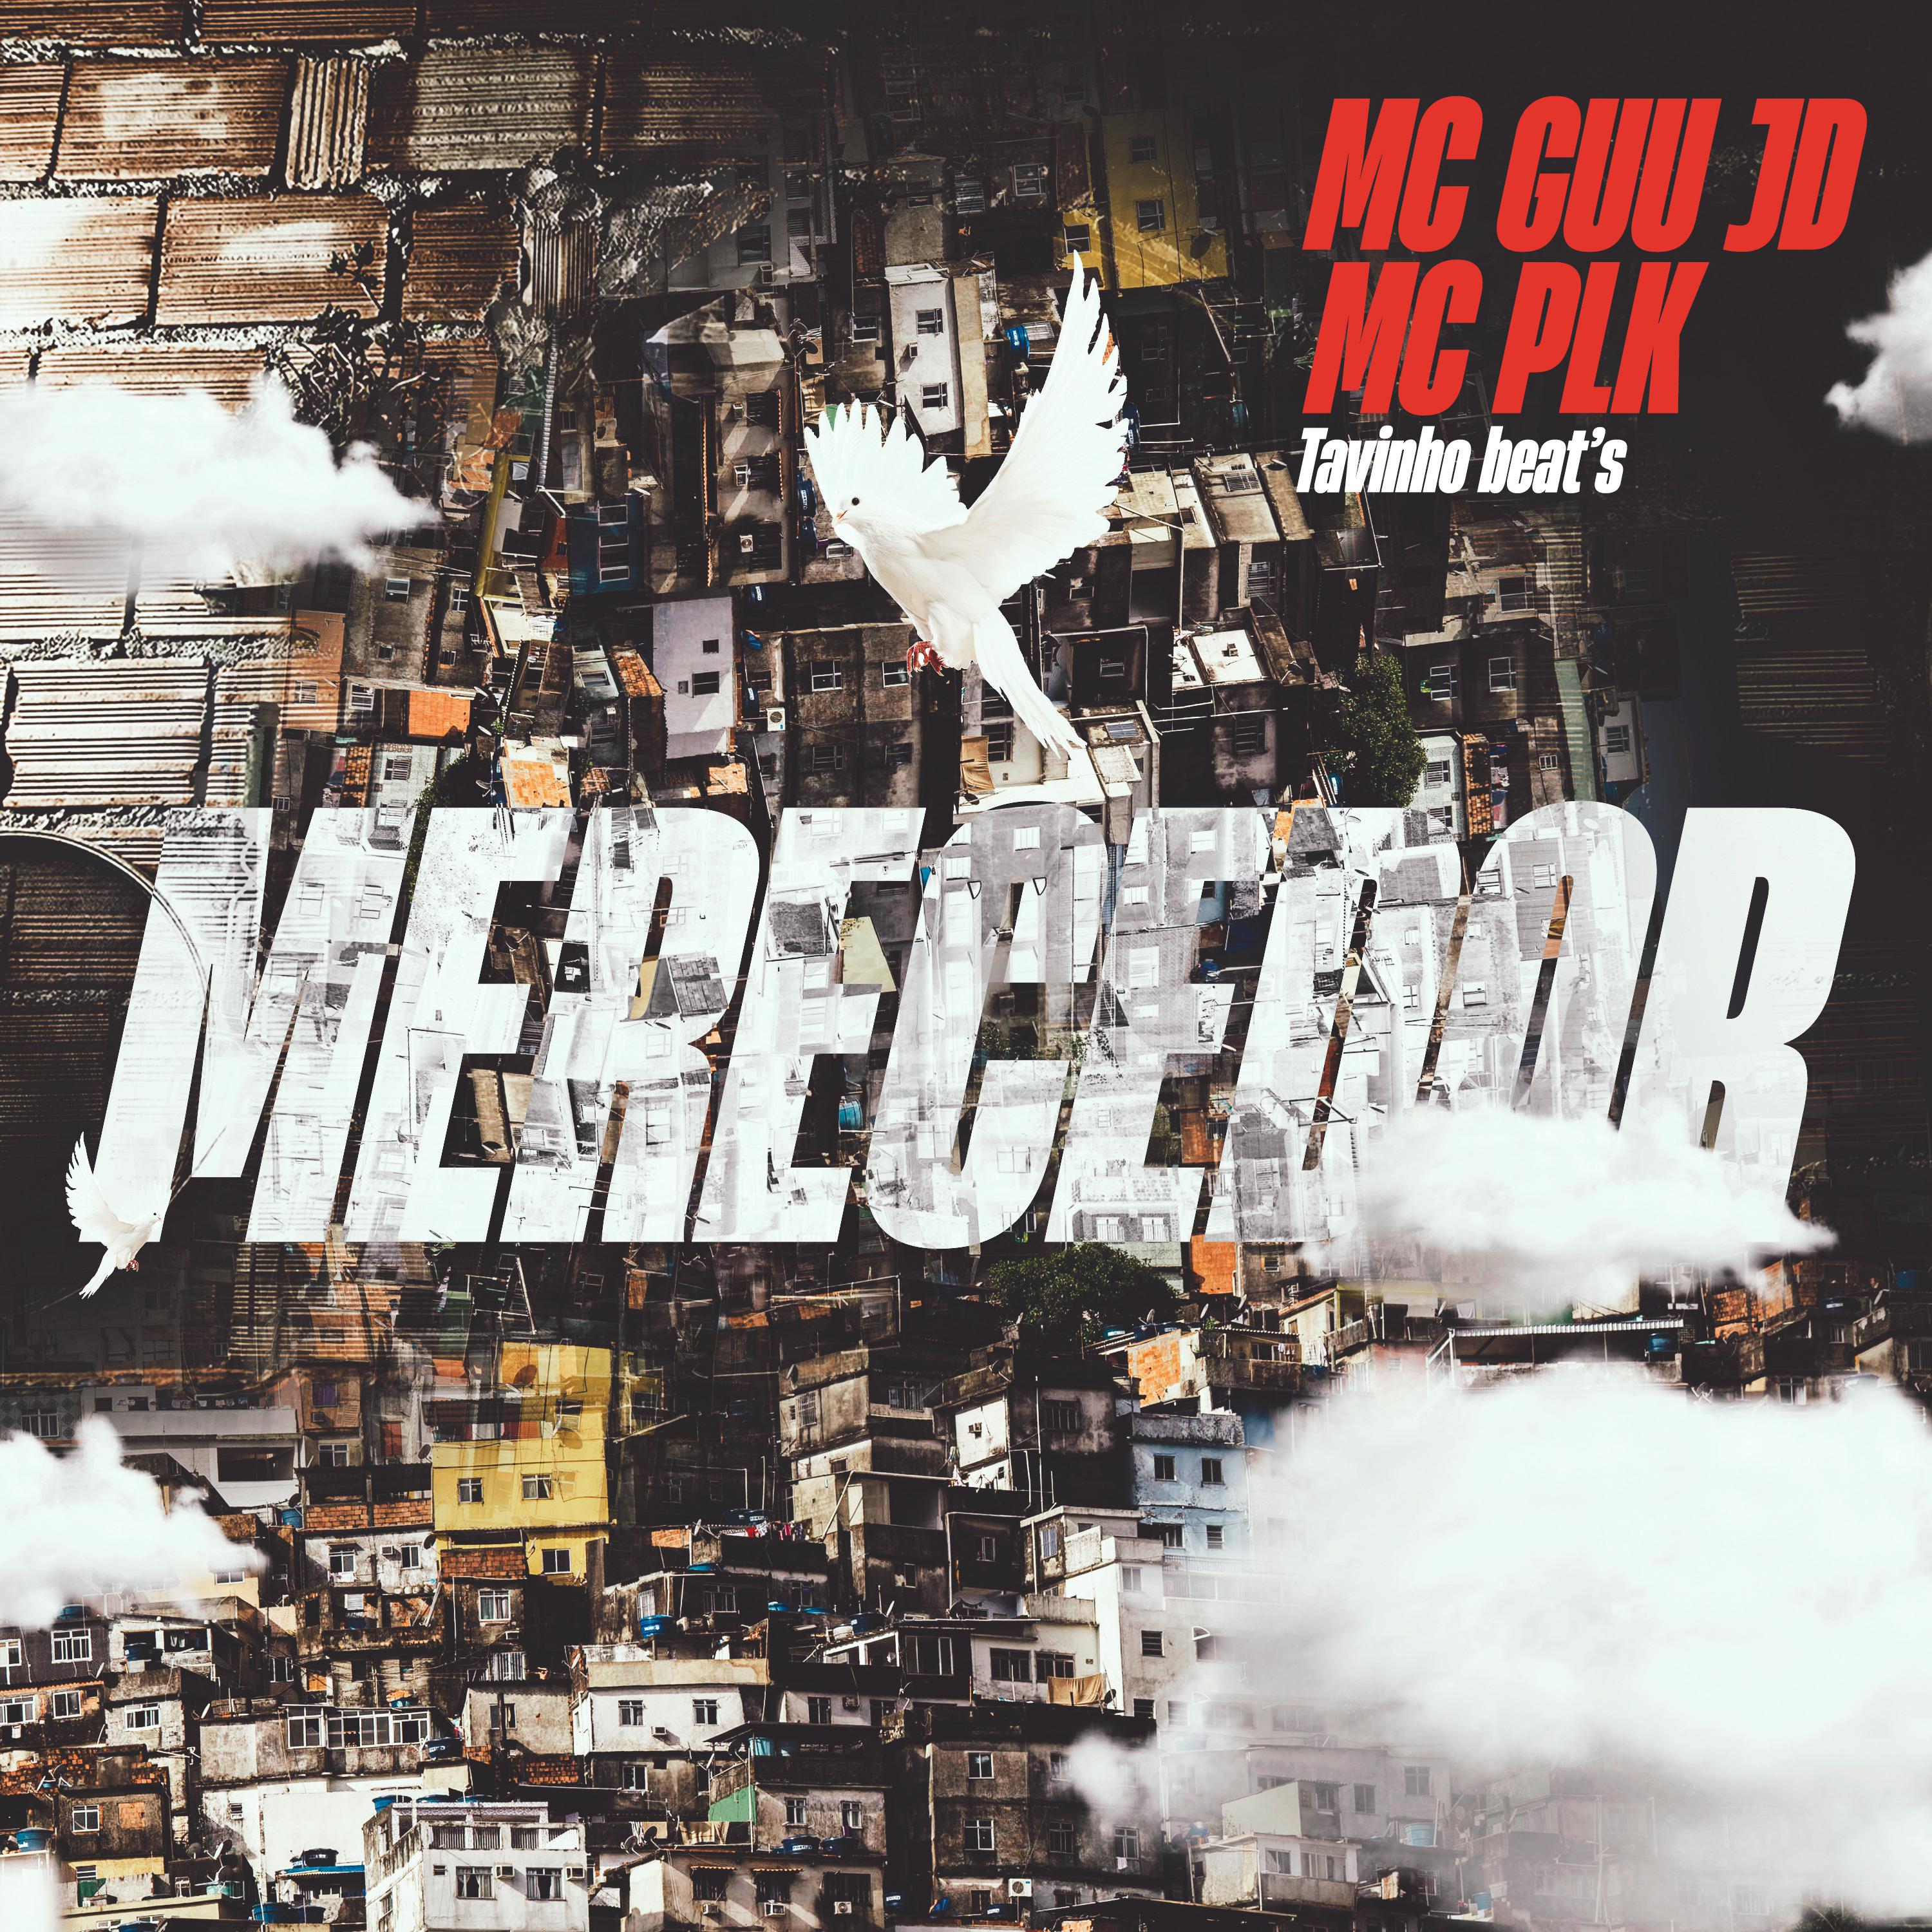 Постер альбома Merecedor